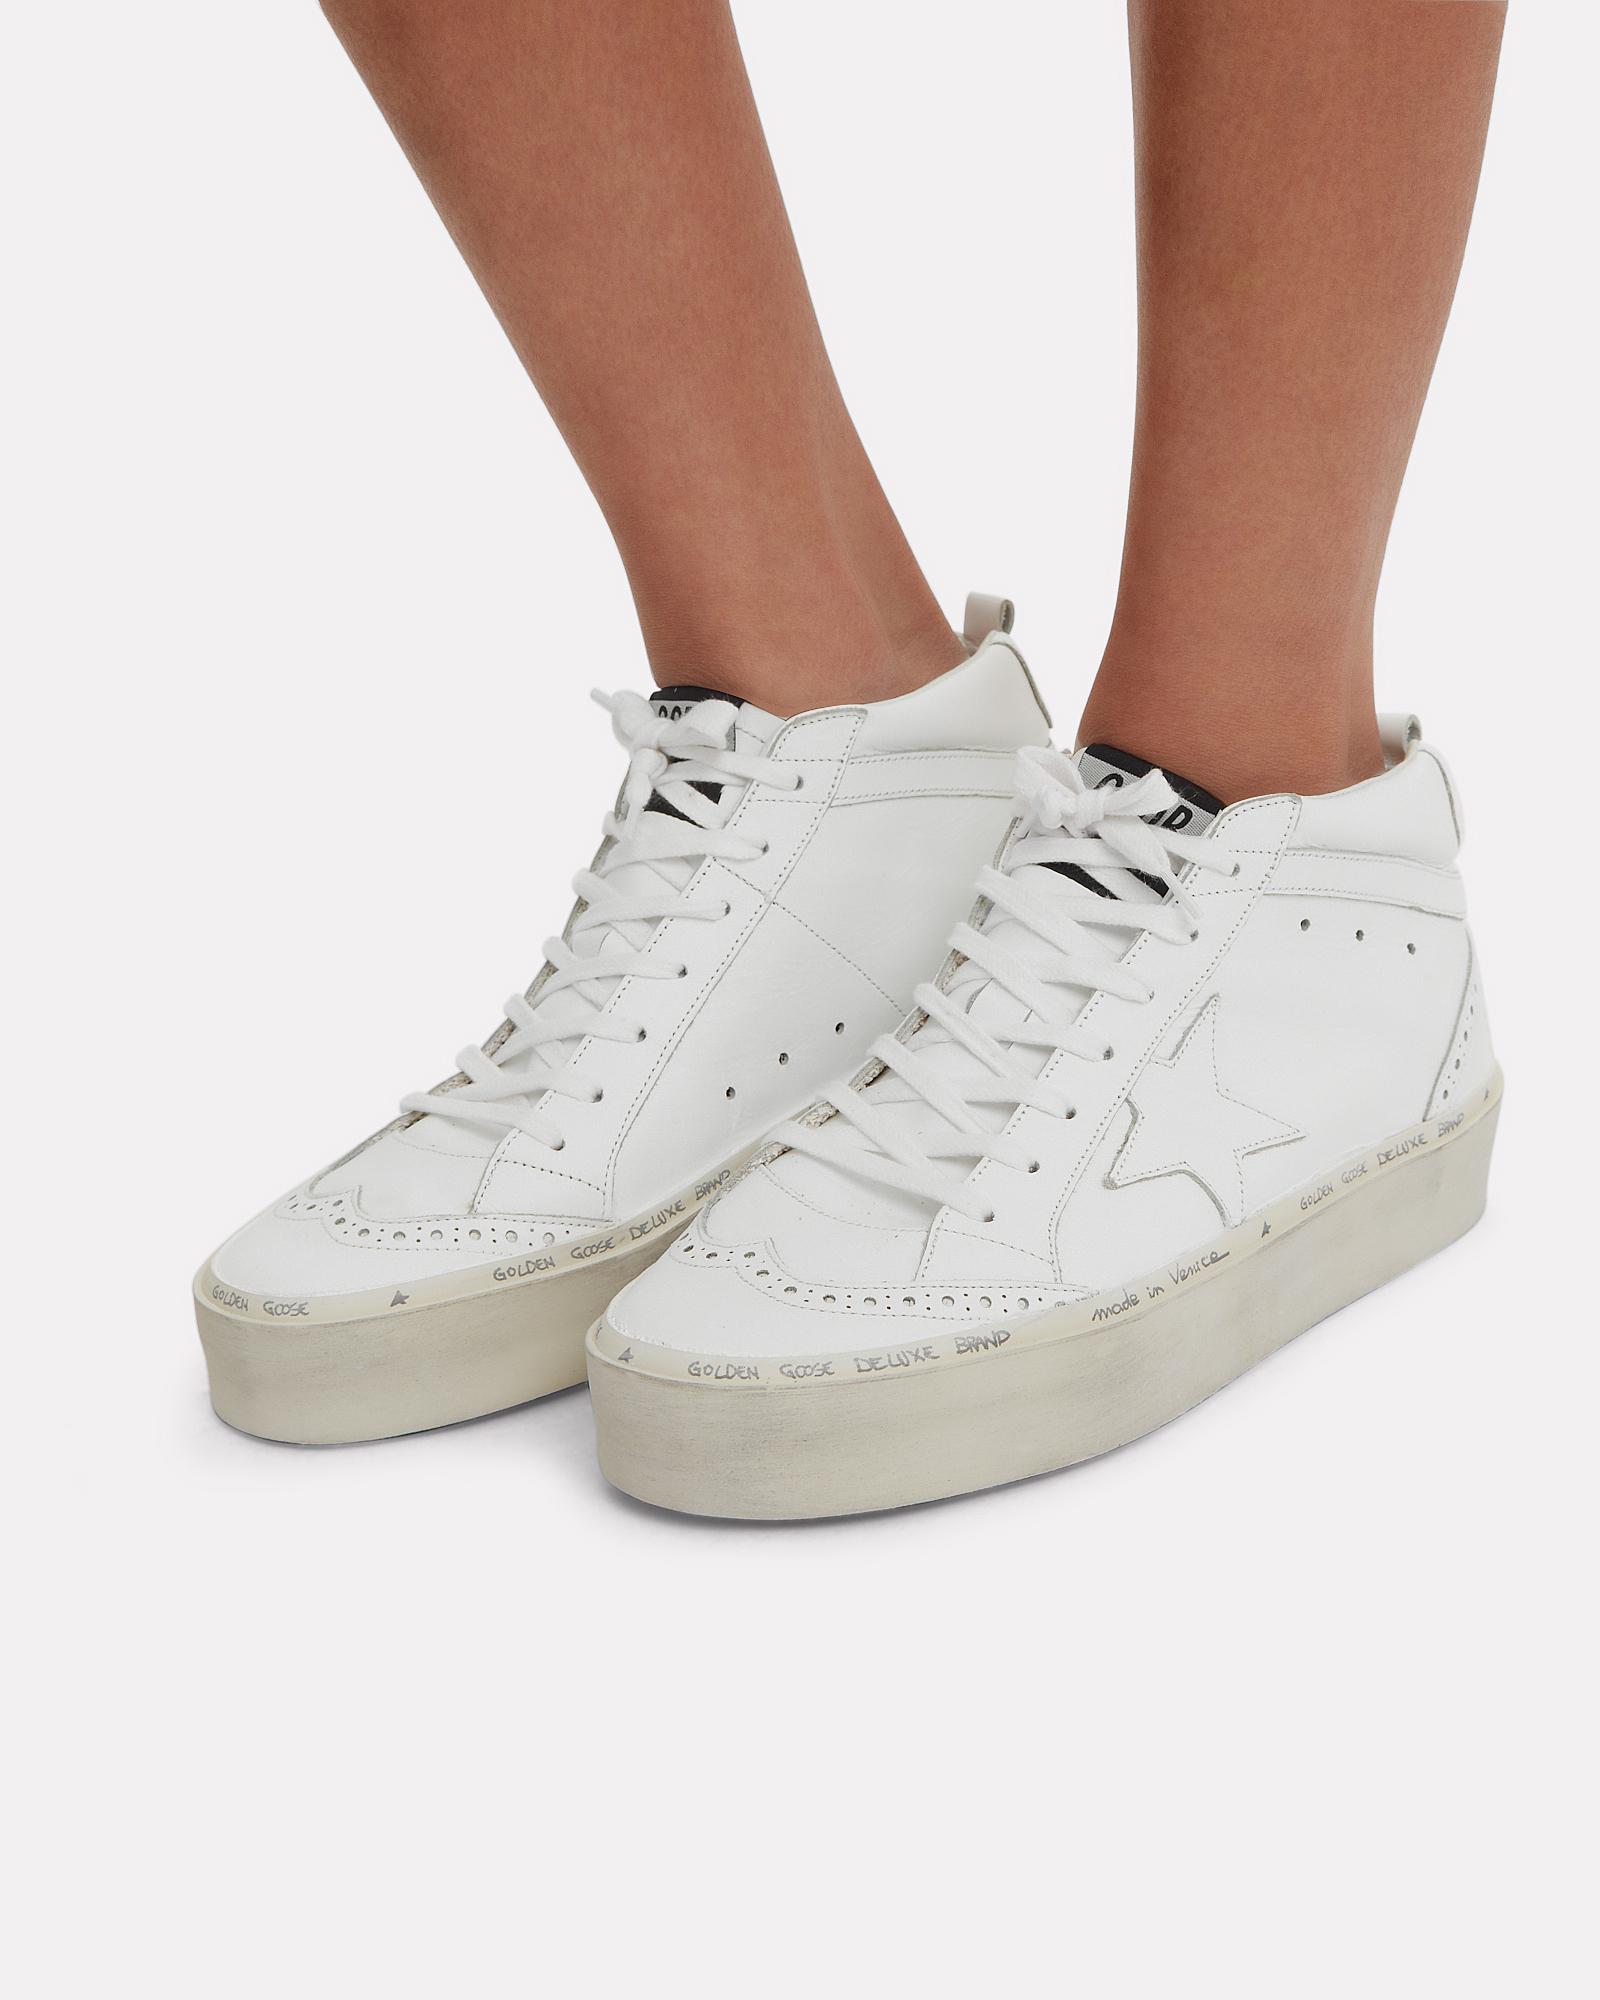 Golden Goose Deluxe Brand Hi Mid Star White Leather Platform Sneakers